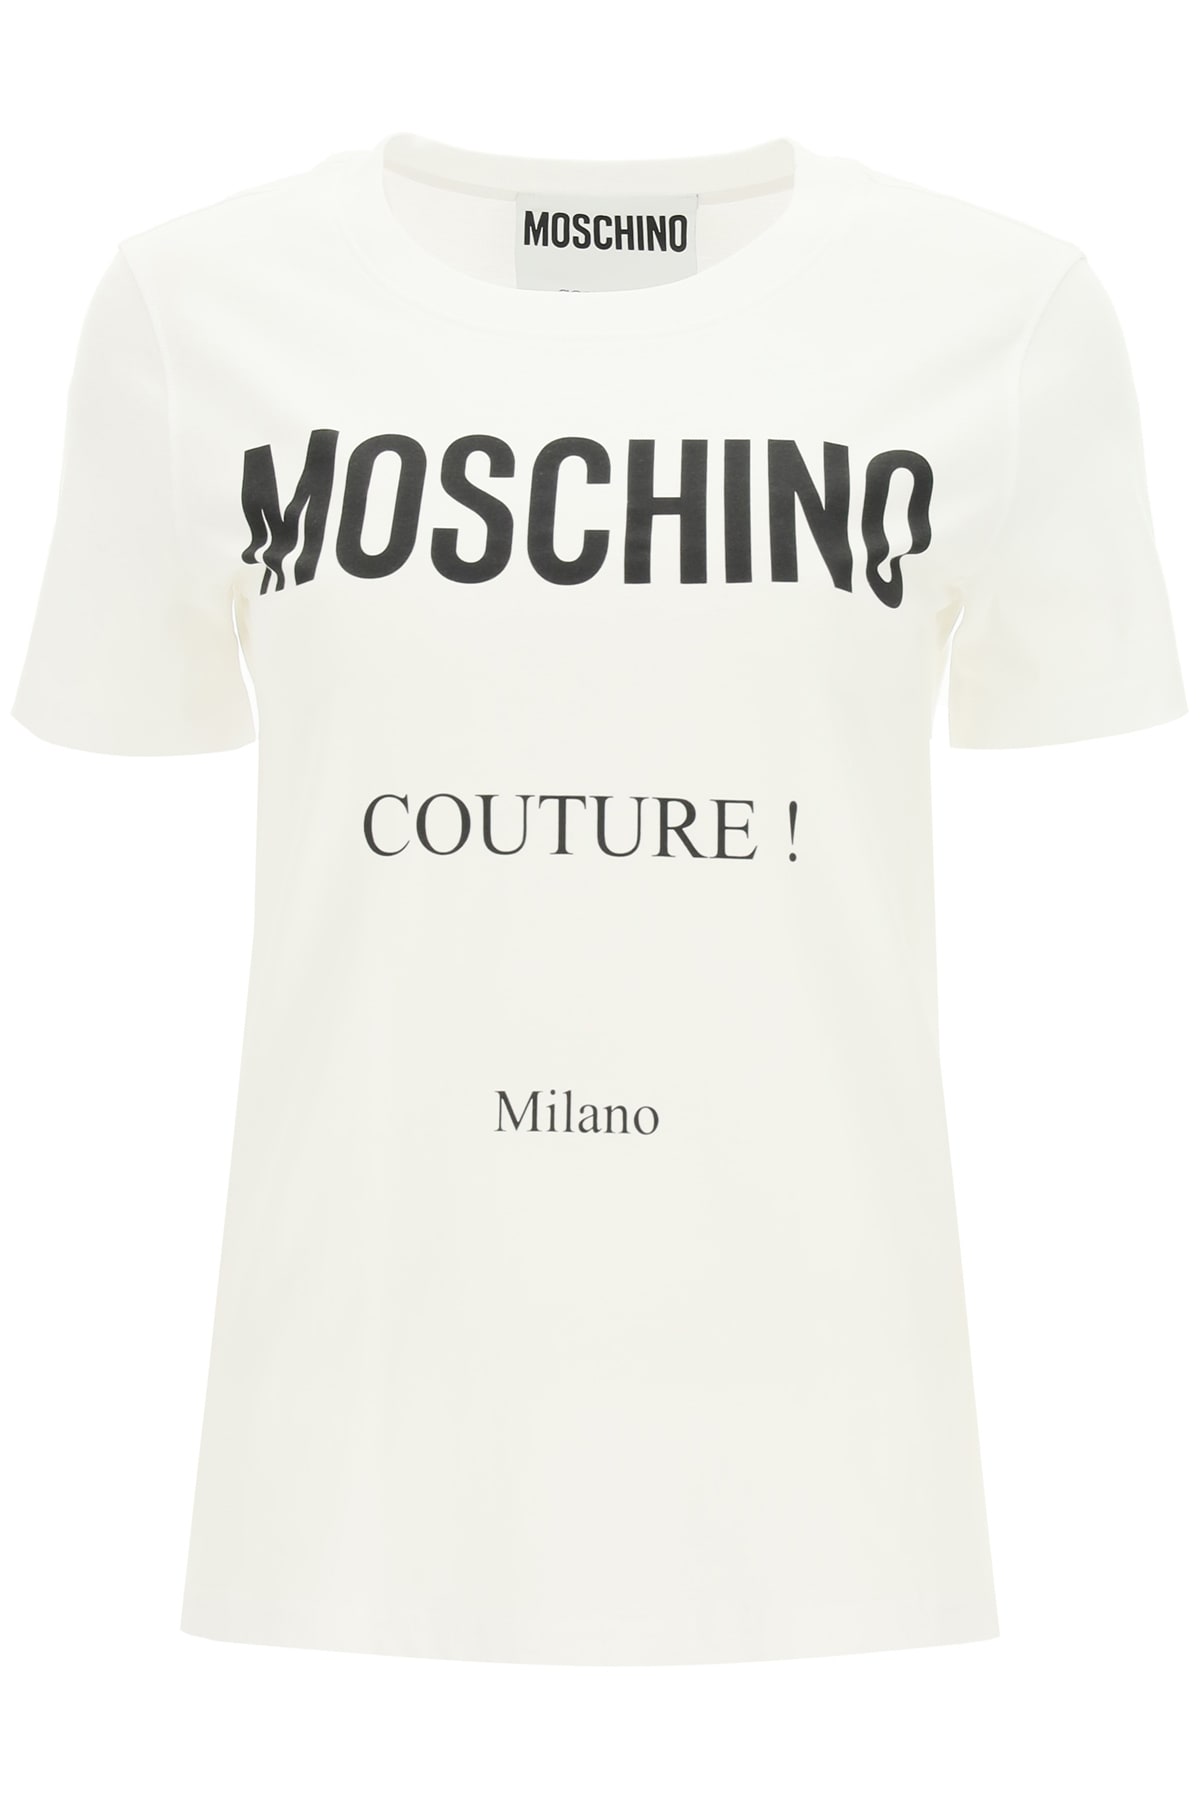 Moschino moschino Couture Print T-shirt